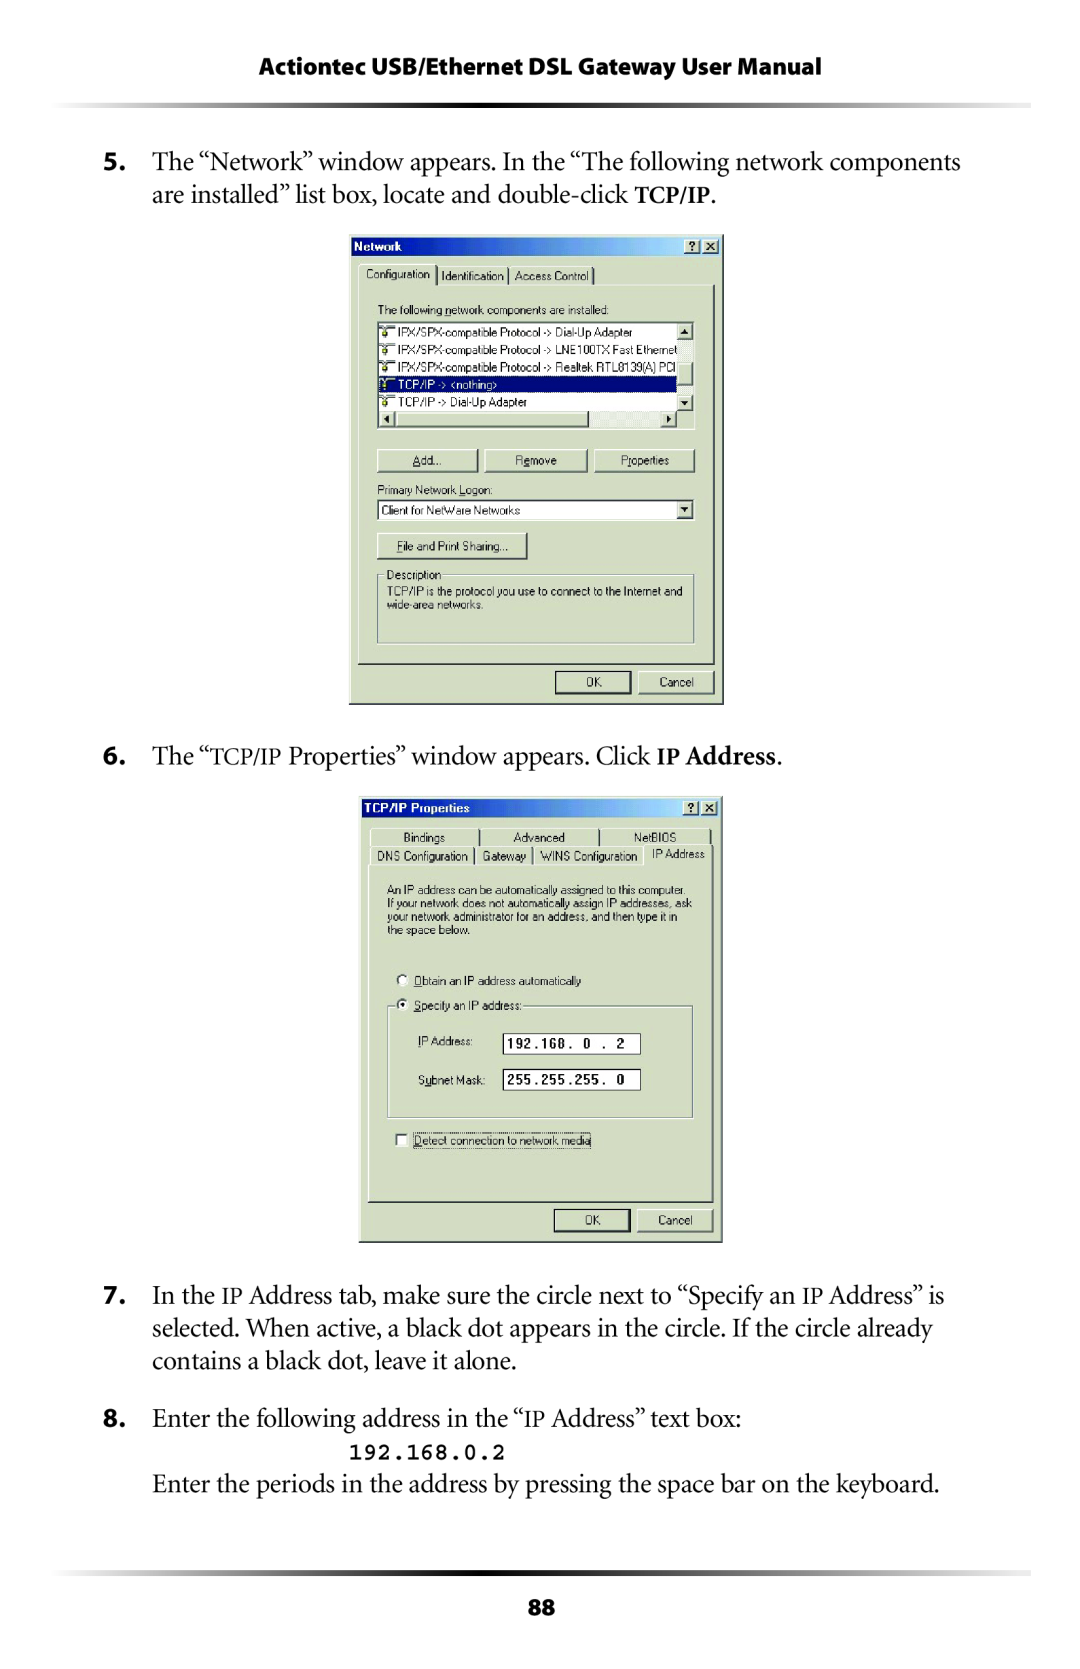 Gateway GT704 user manual The “TCP/IP Properties” window appears. Click IP Address 